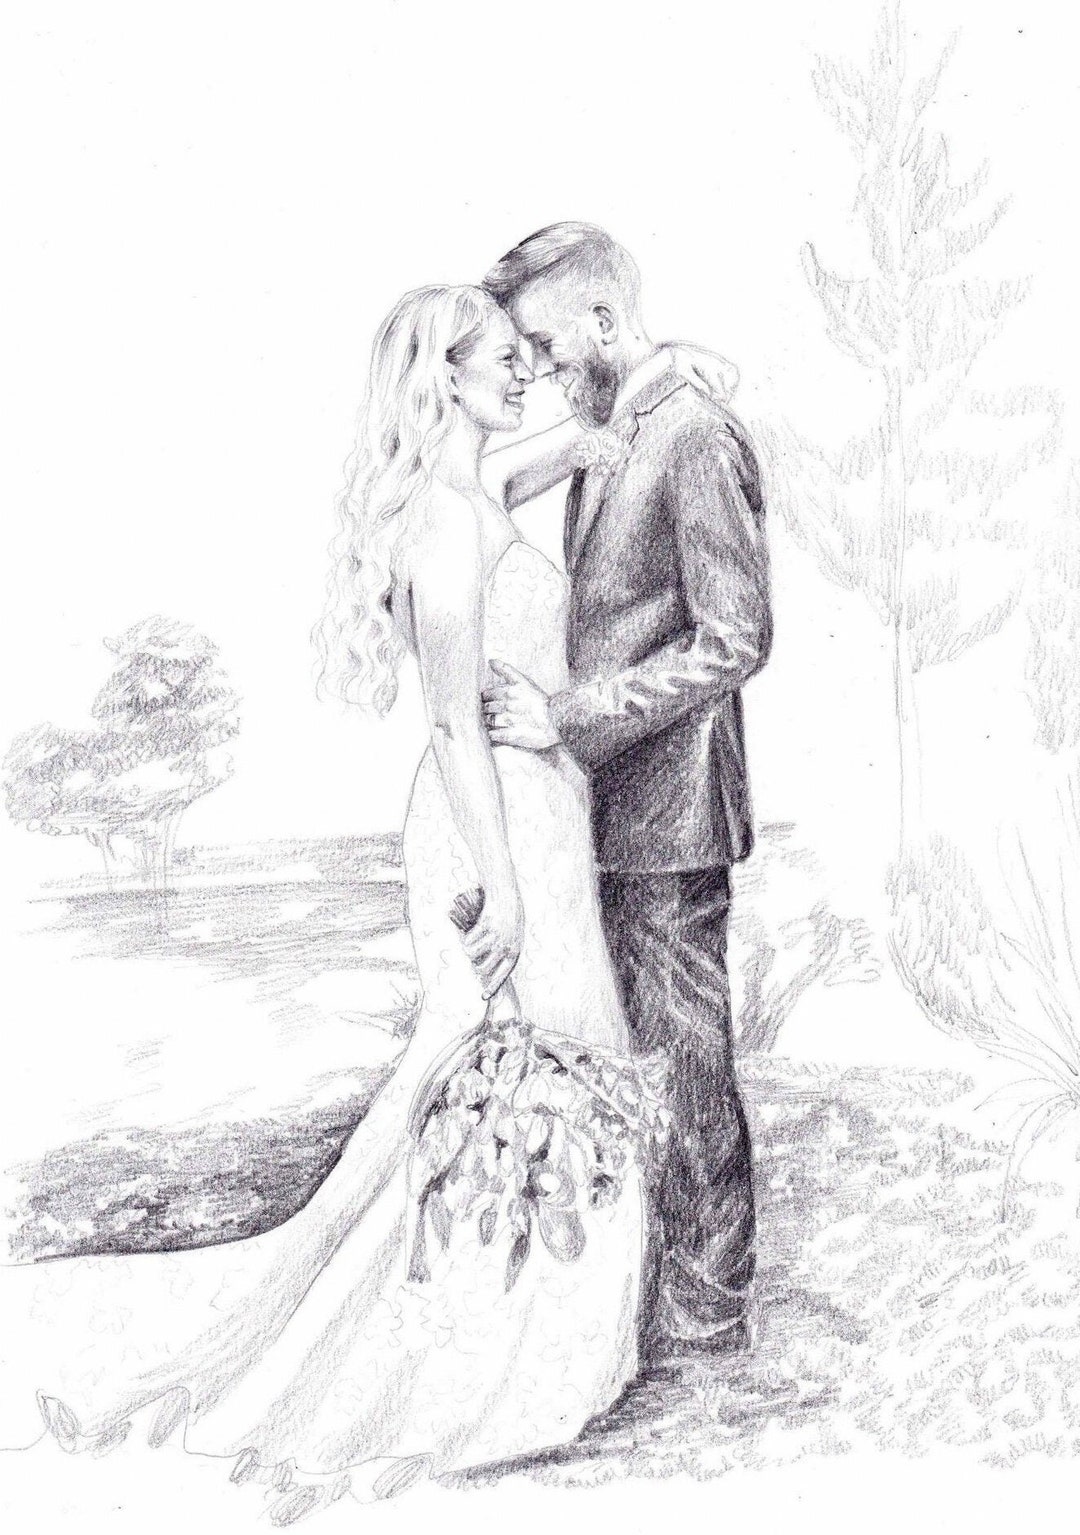 Criss Rosu - illustrator (@criss_rosu) • Instagram photos and videos |  Wedding dress sketches, Bride clipart, Wedding illustration